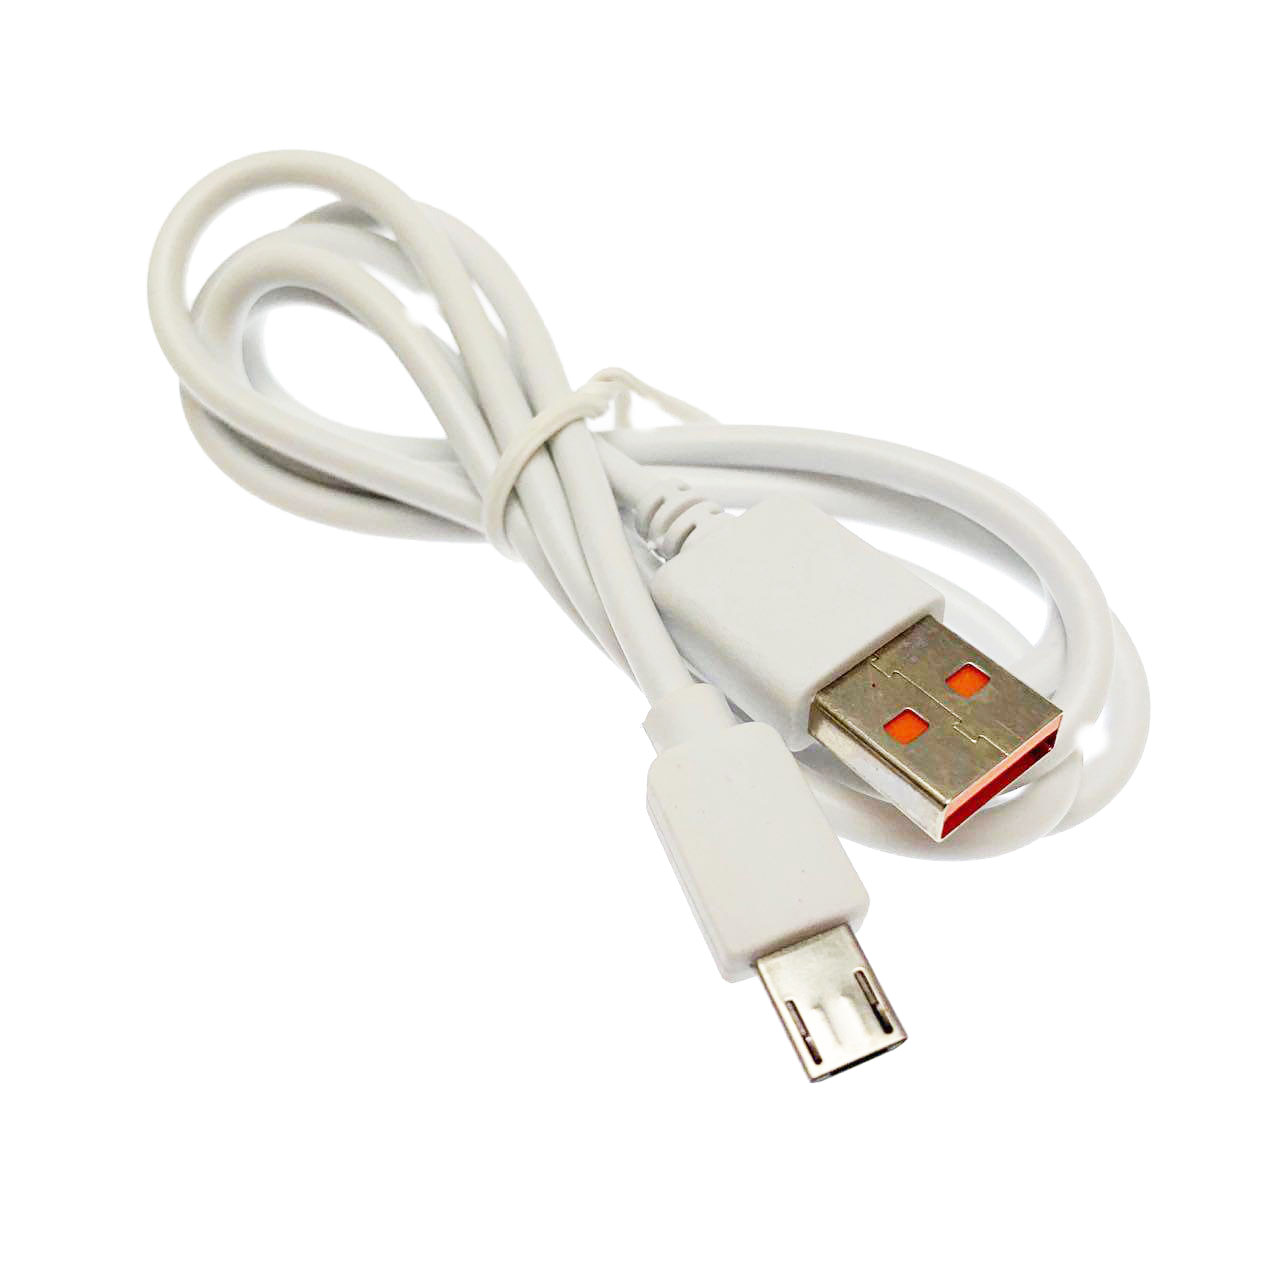 USB Дата кабель "MR24m" micro USB, 1 метр, силикон, удлиненный micro USB, цвет белый